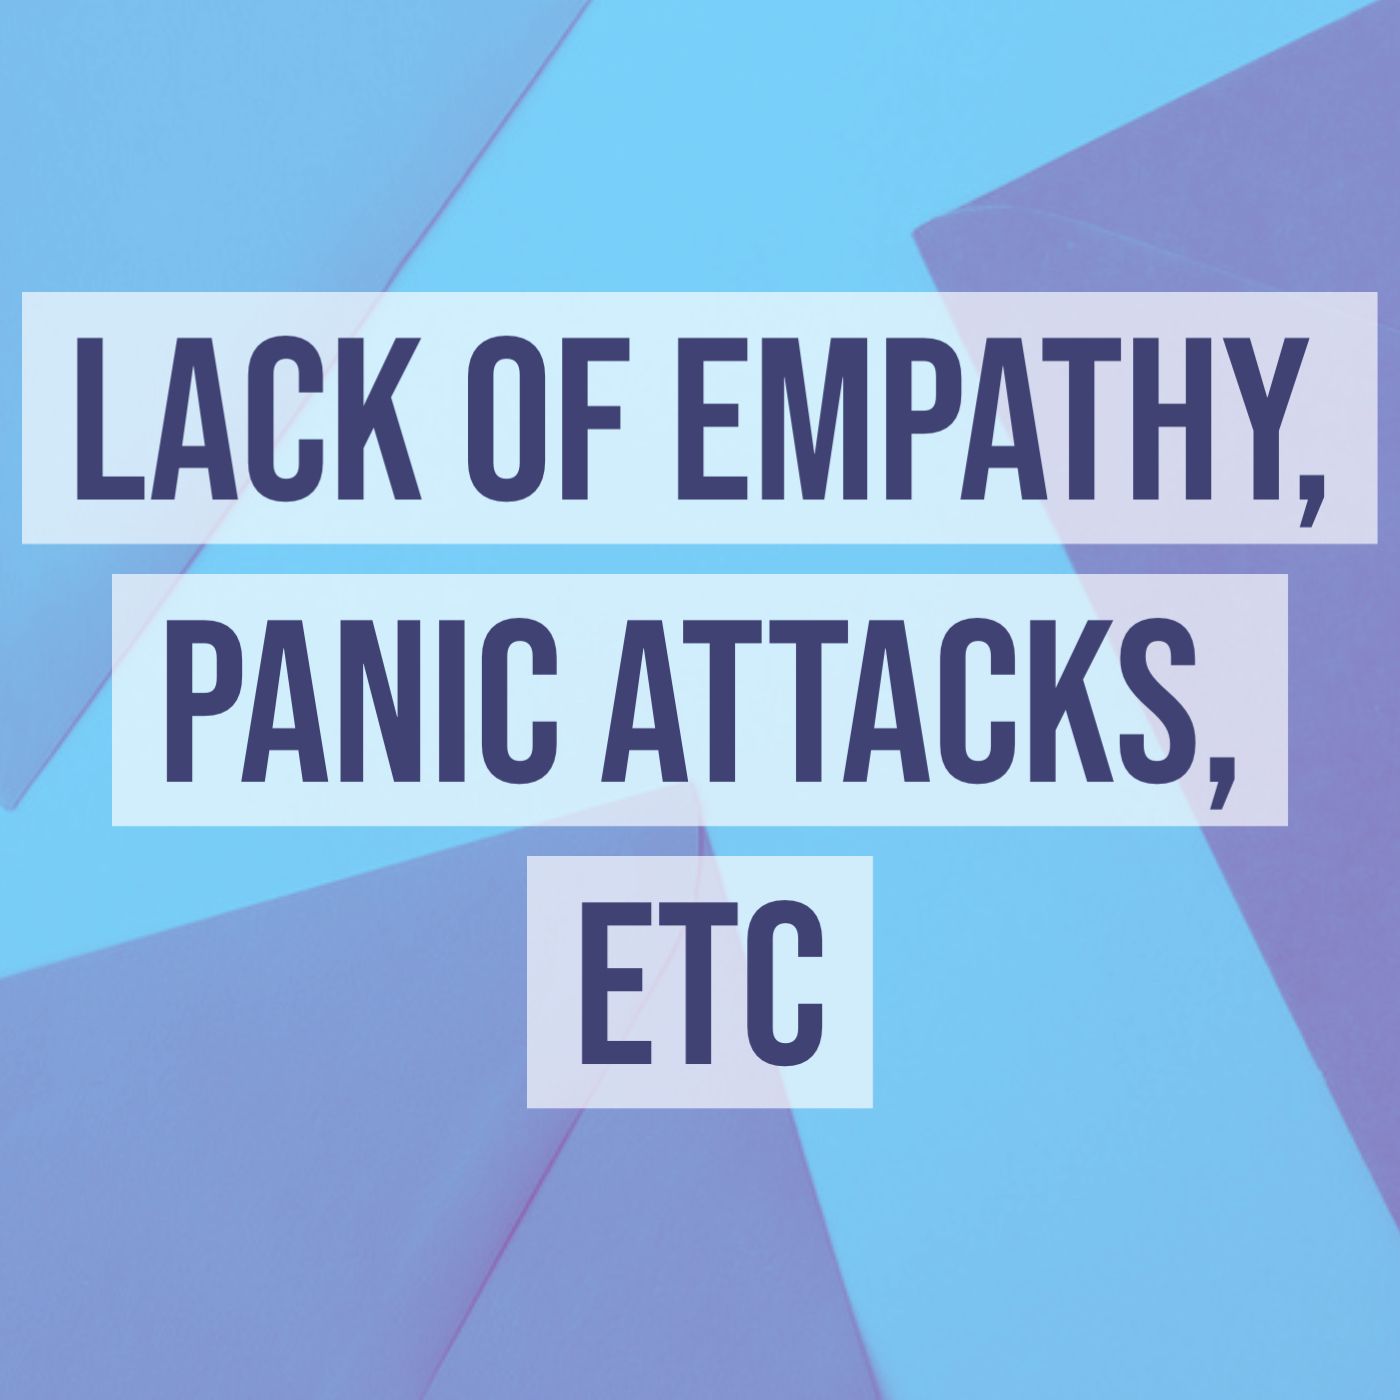 Lack of Empathy, Panic Attacks, Etc